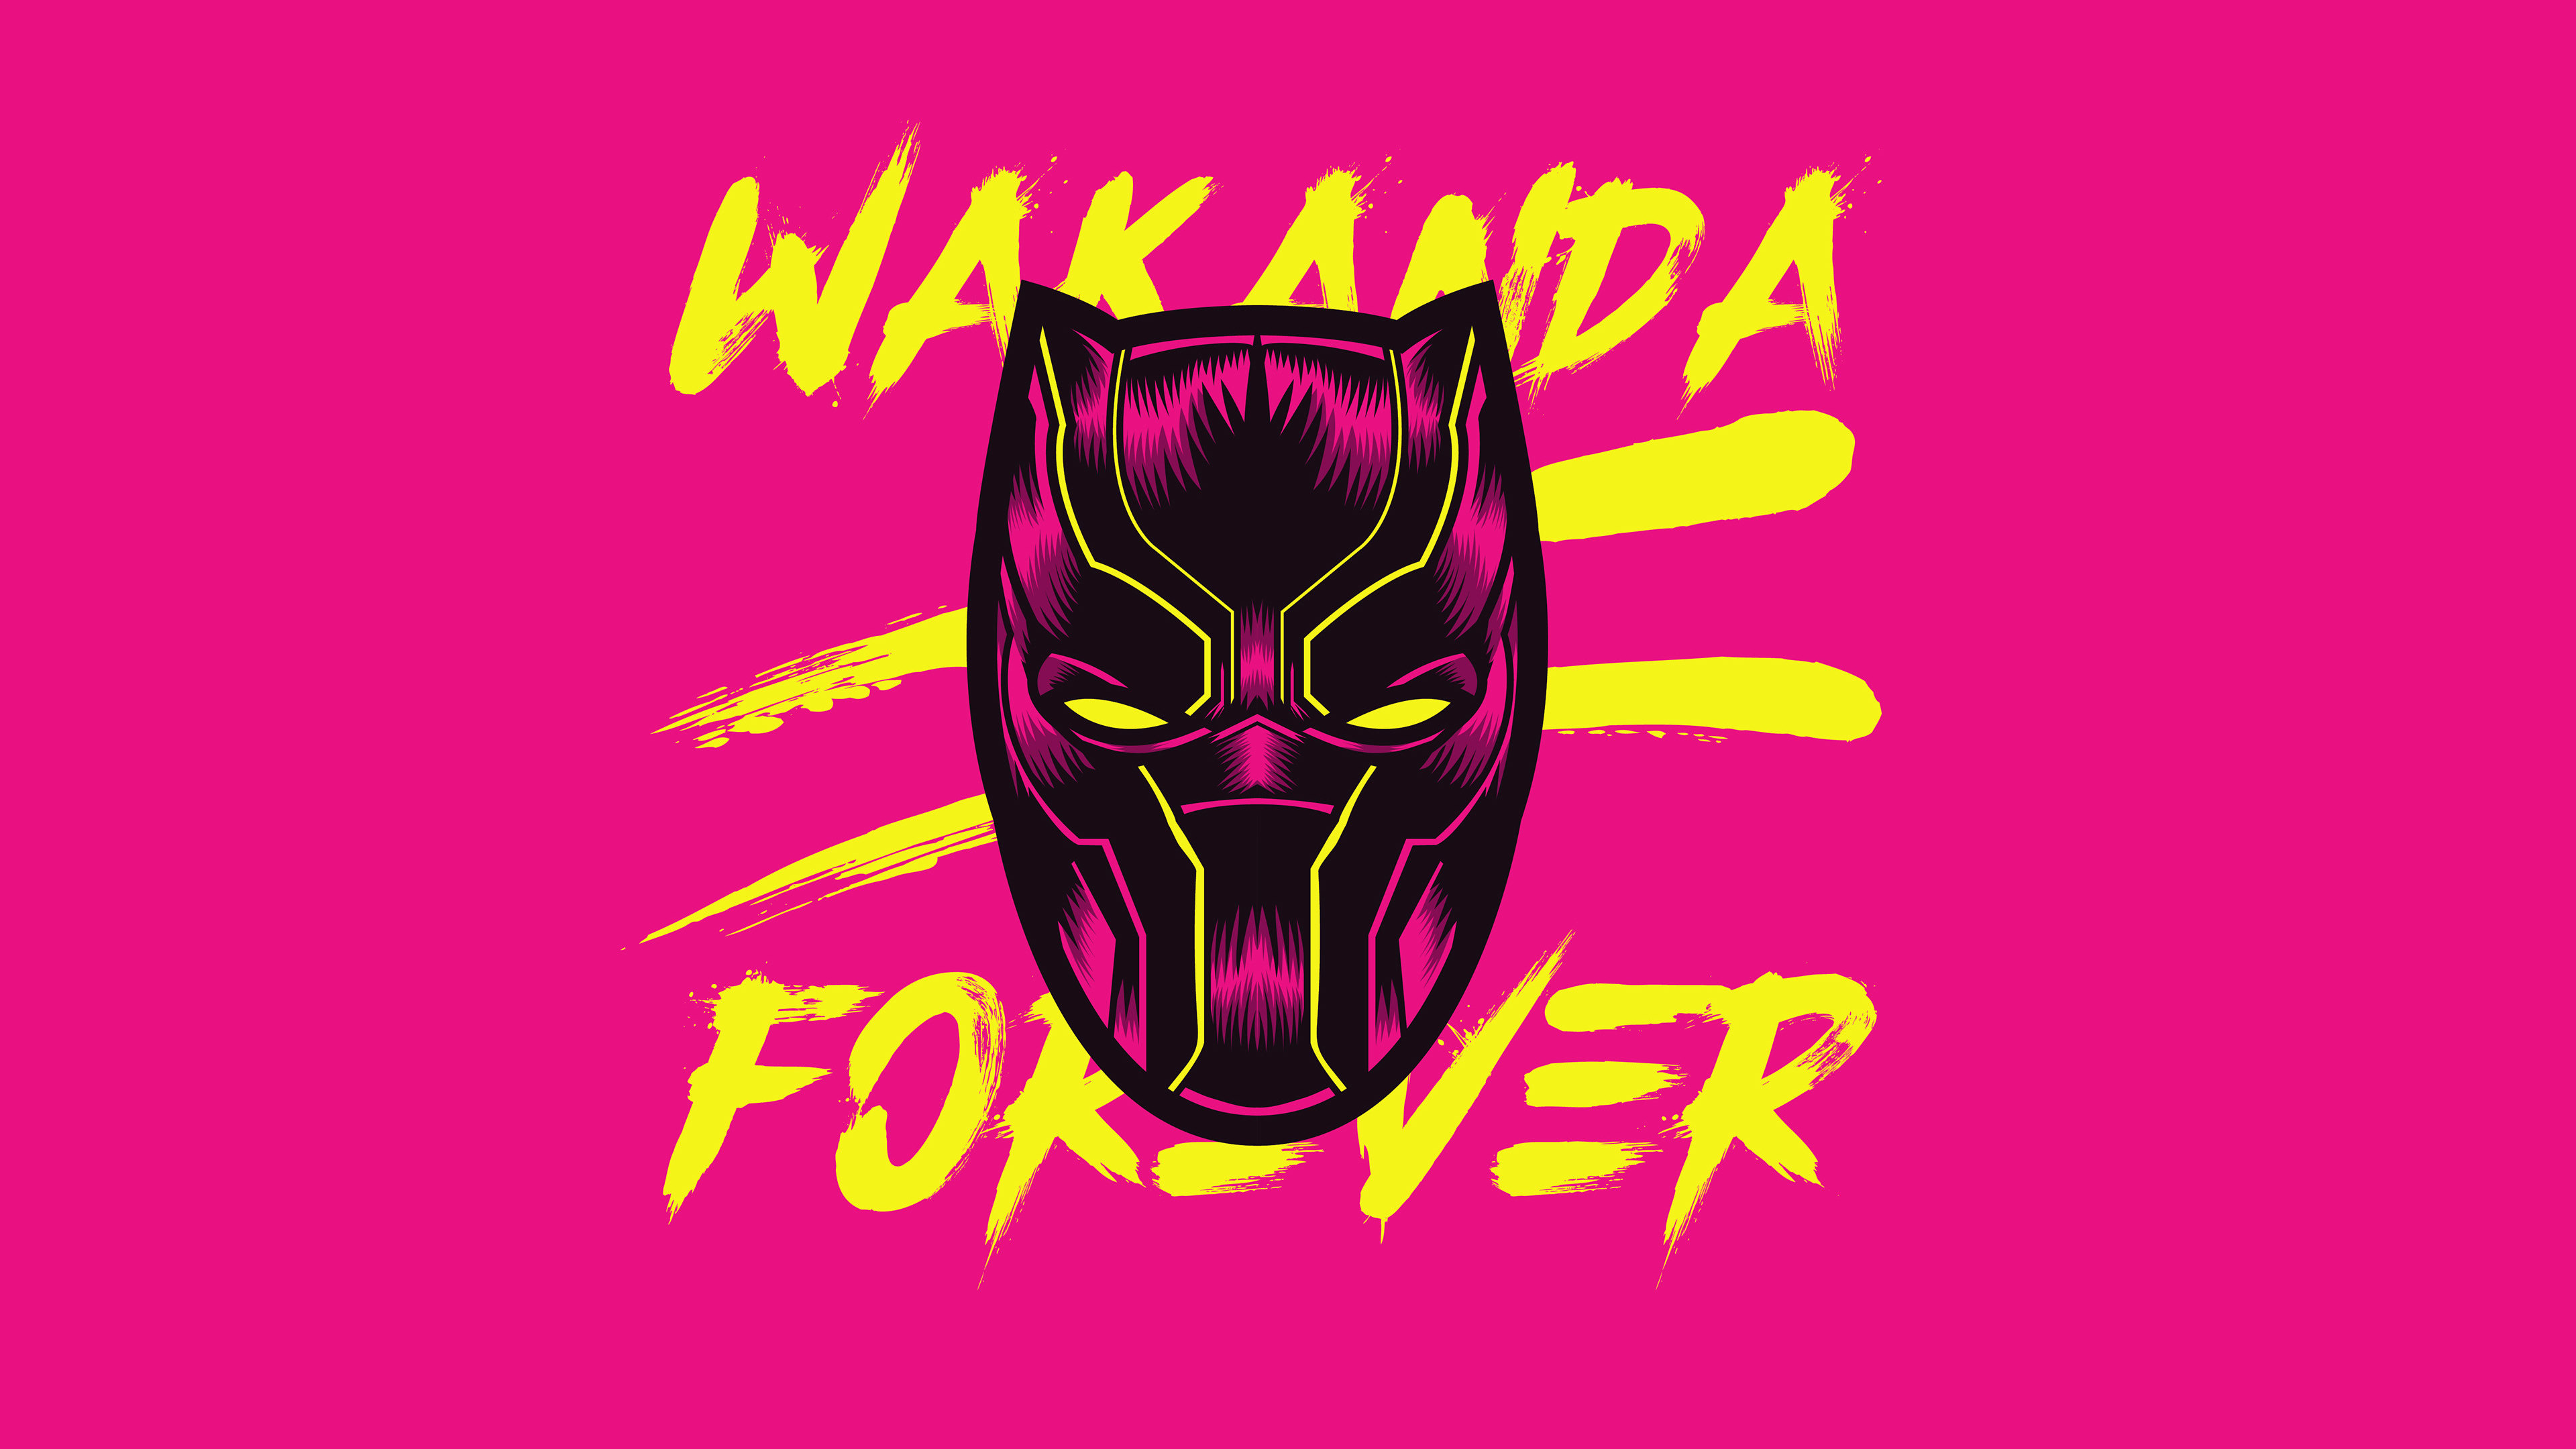  Black  Panther  Wakanda  Forever  superheroes wallpapers  hd 